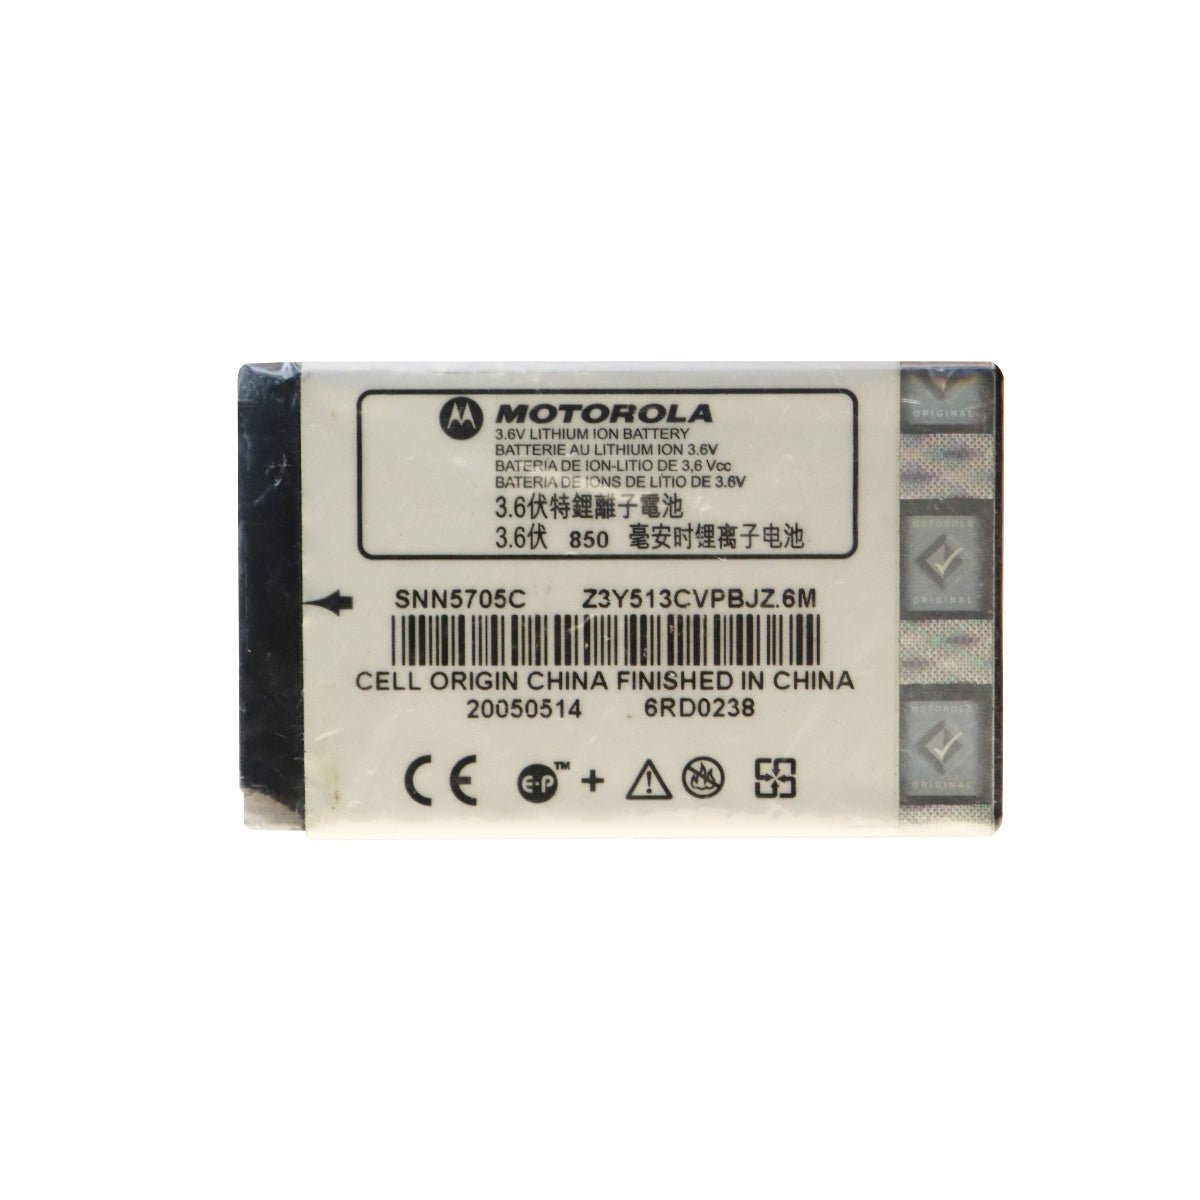 Motorola Rechargeable (750mAh) OEM Battery (SNN5705C) for NEXTEL I860/I930/I670 Cell Phone - Batteries Motorola    - Simple Cell Bulk Wholesale Pricing - USA Seller